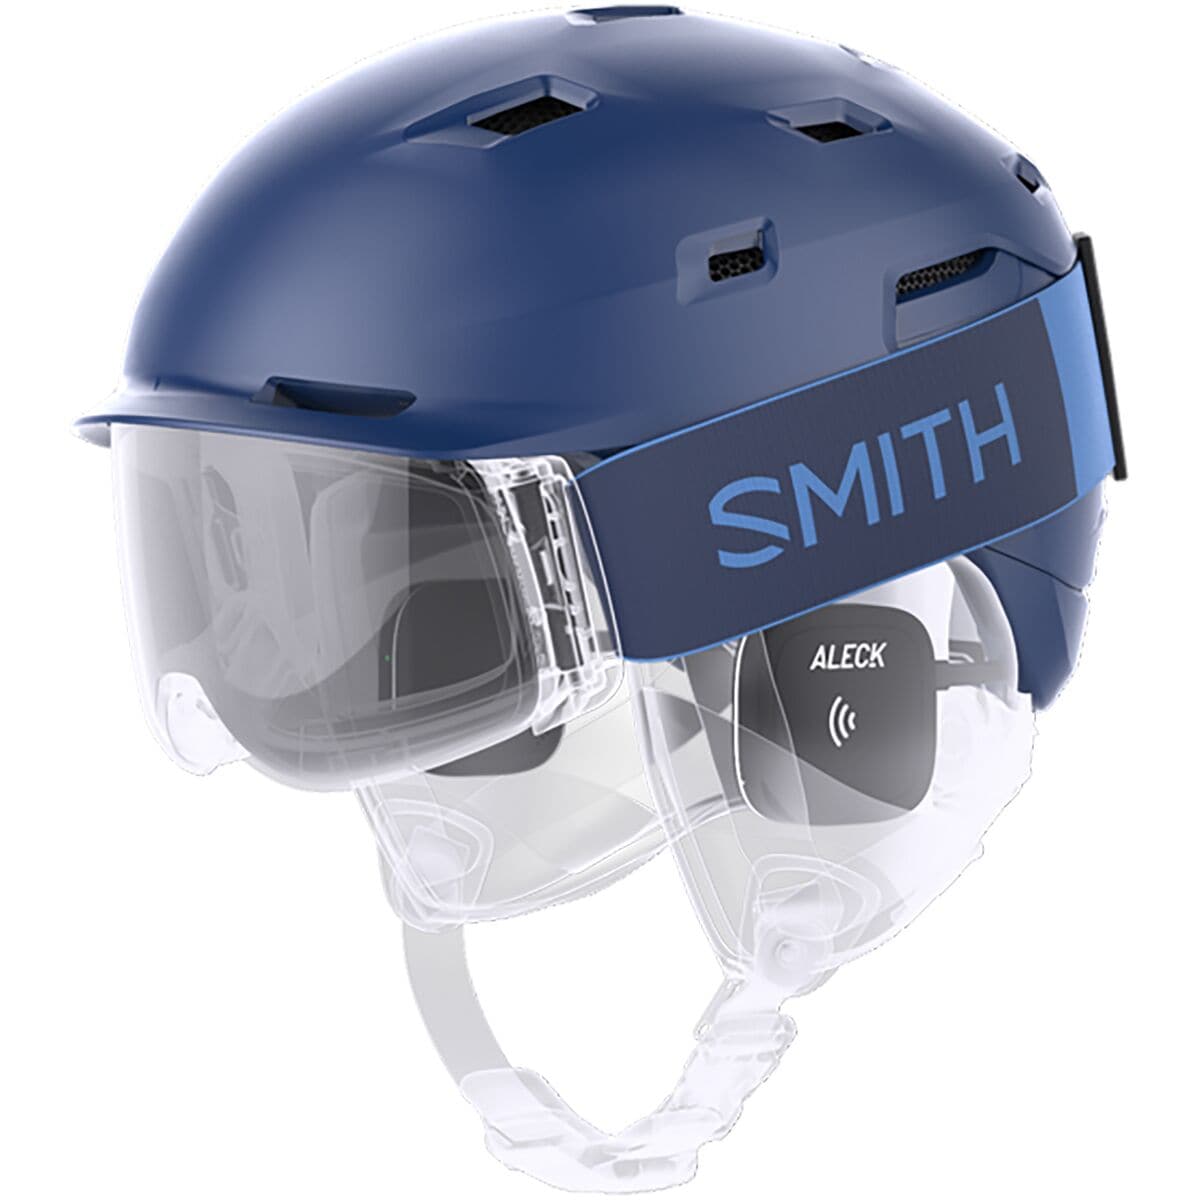 SMITH Système Audio pour Casque de Ski Smith Aleck - Muule